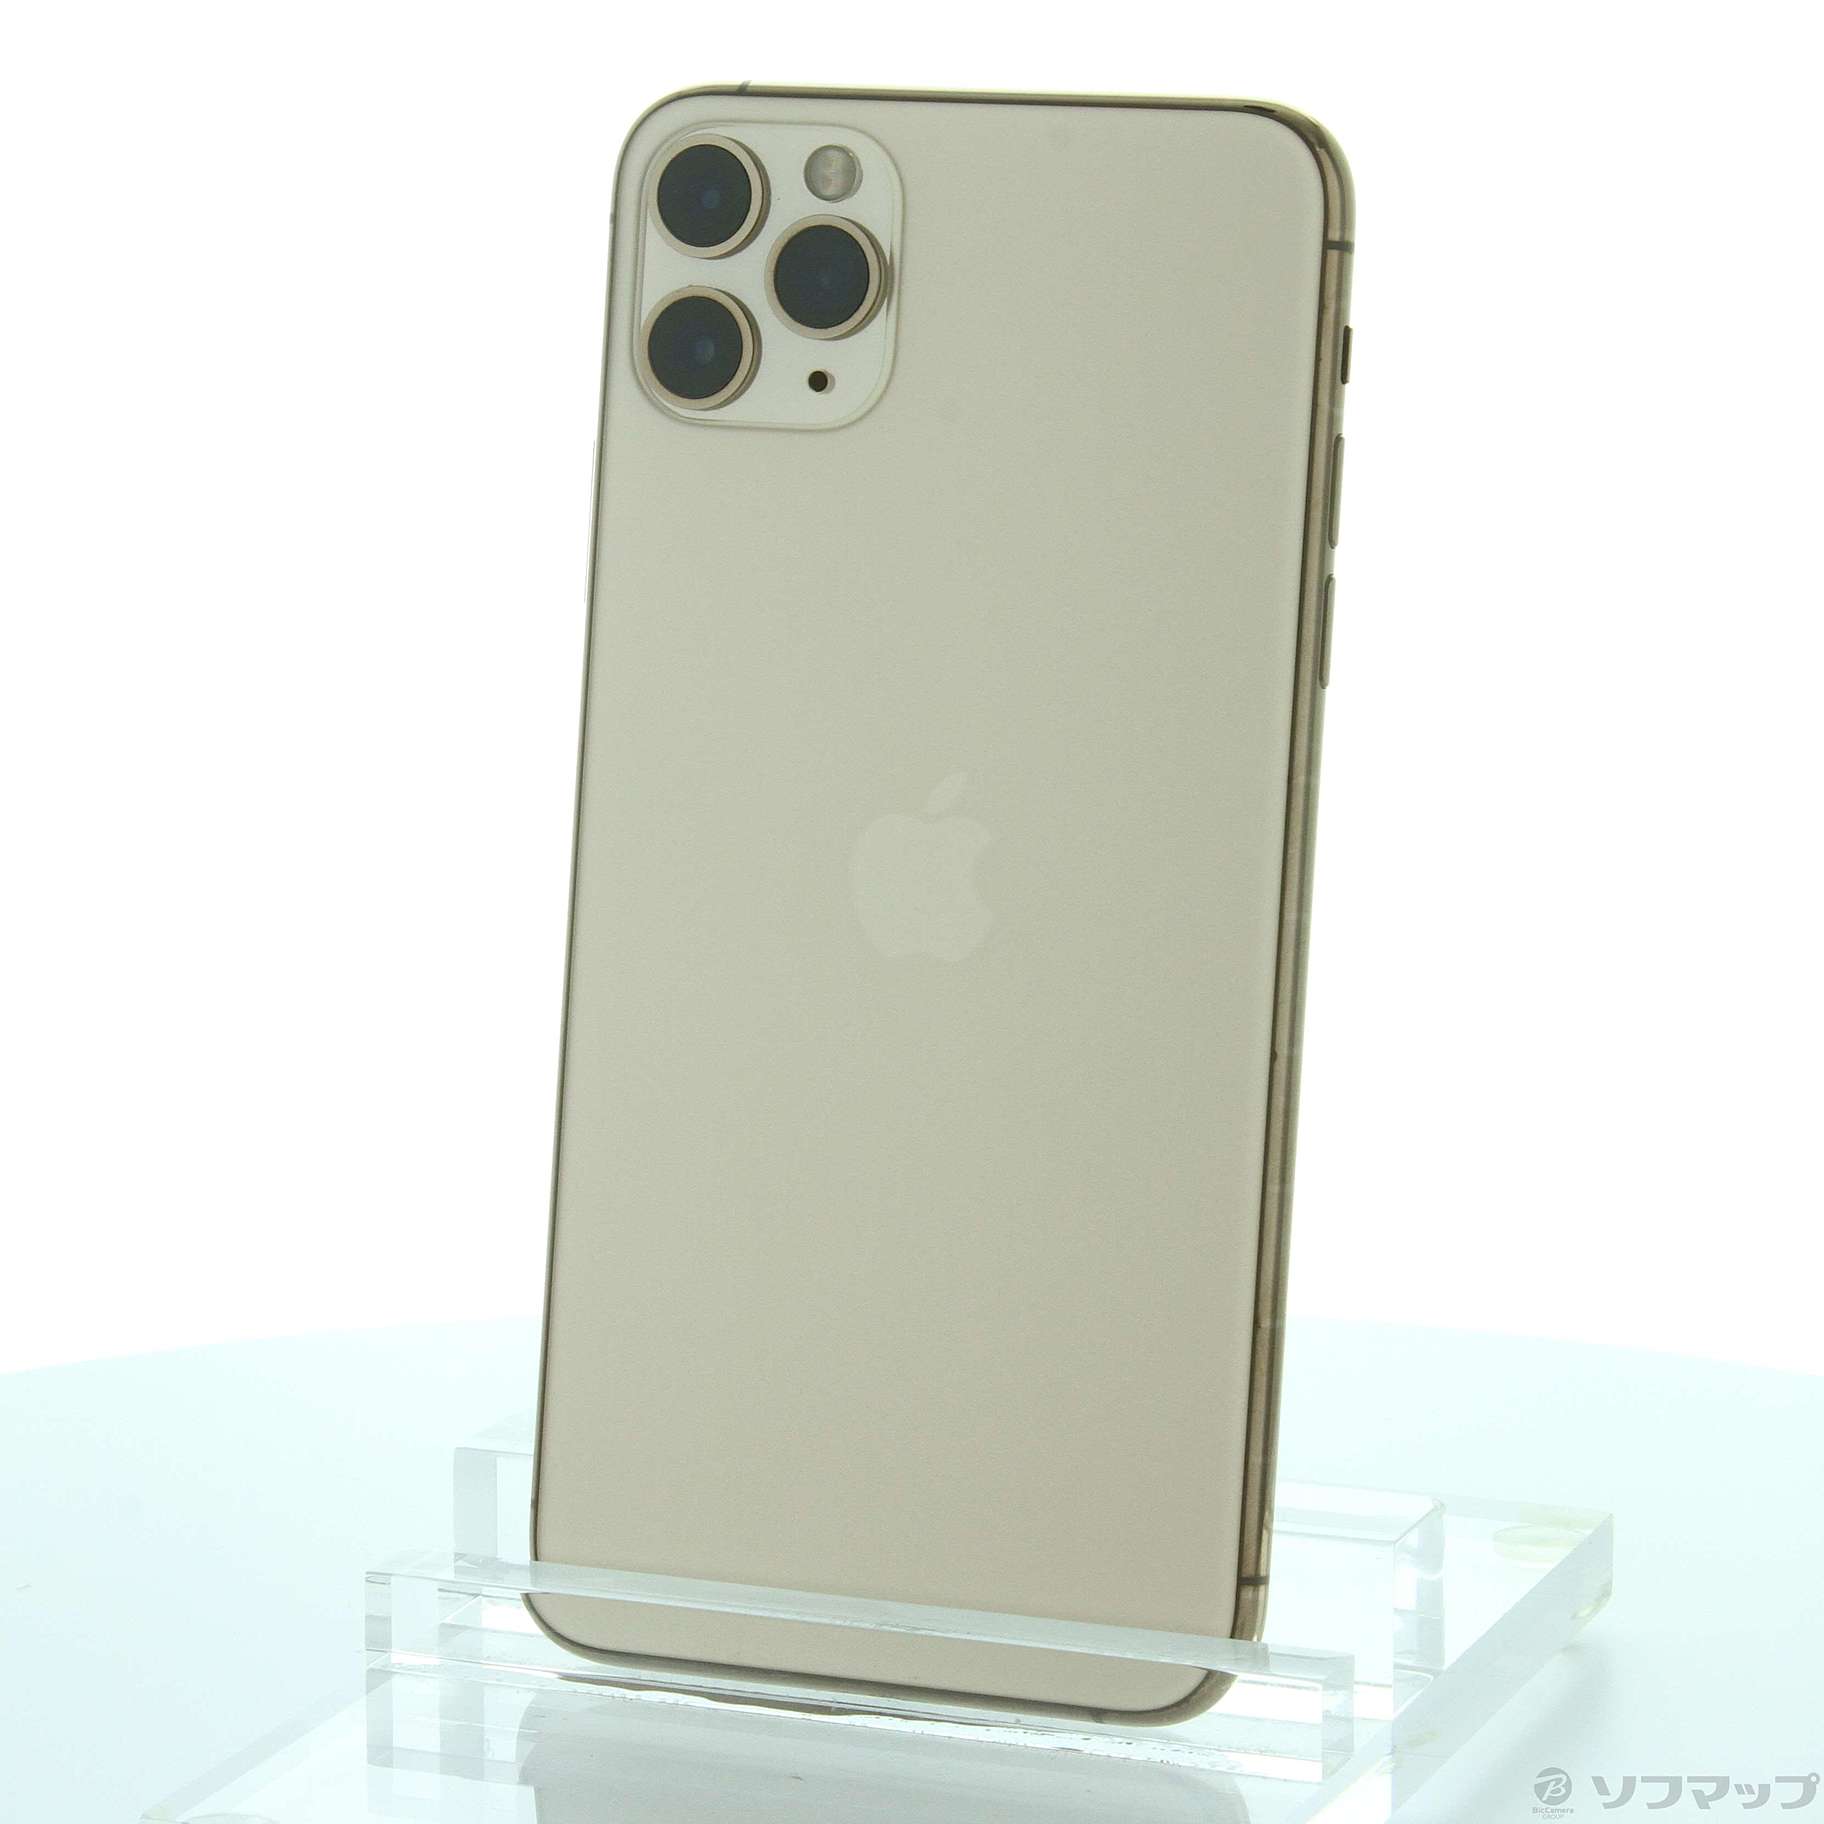 iPhone 11 Pro Max ゴールド 64 GB SIMフリー